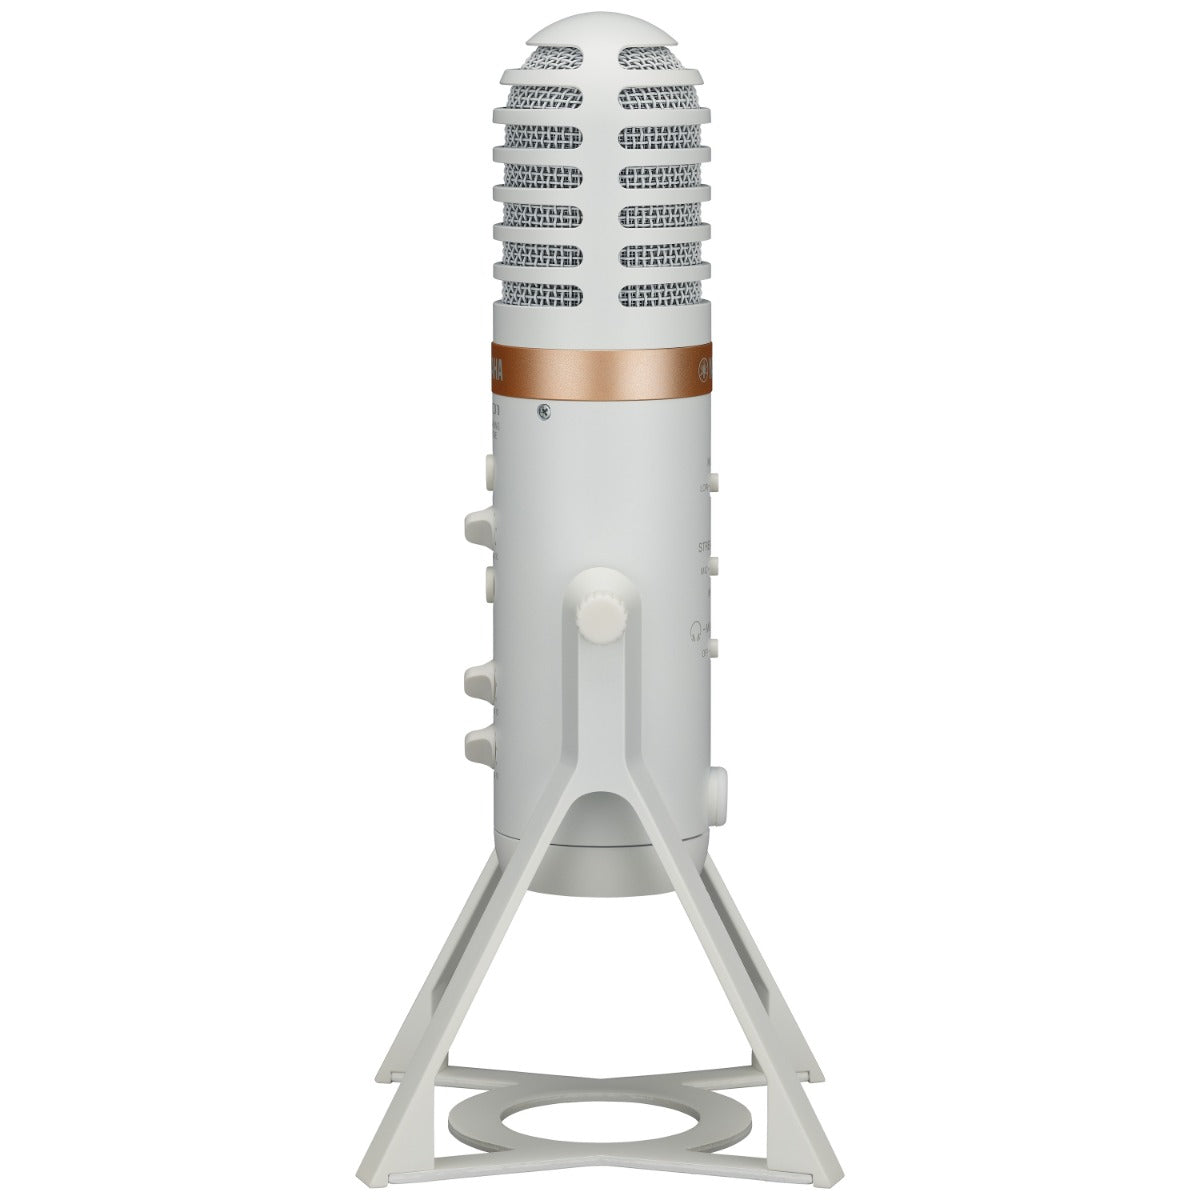 Yamaha AG01 Live Streaming USB Microphone - White view 4